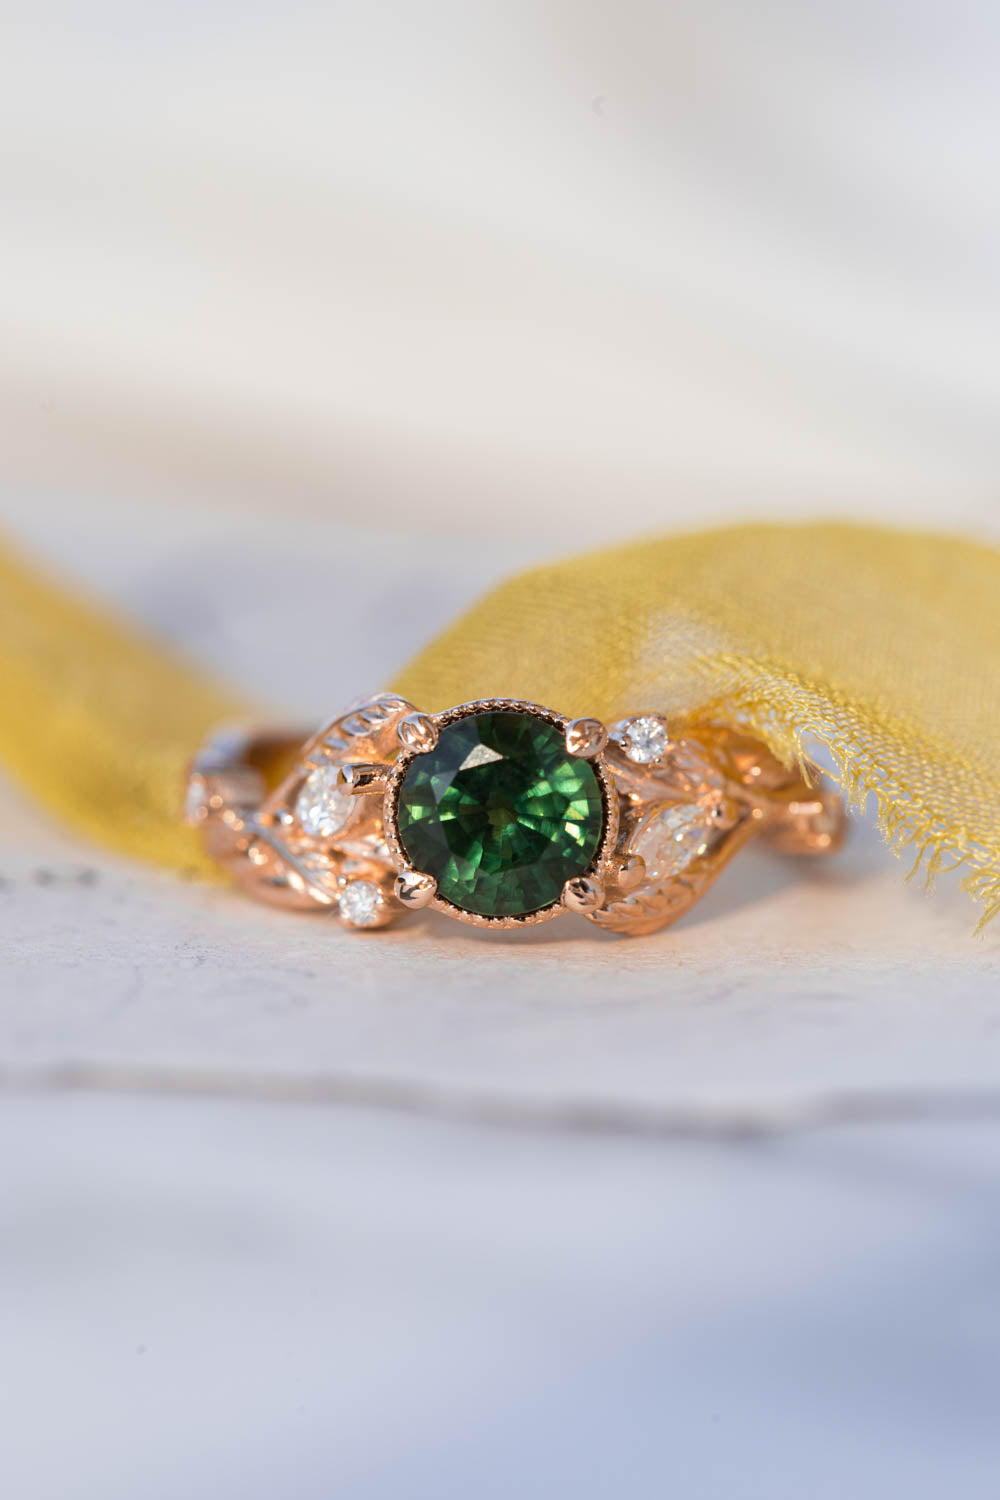 Patricia asymmetric | custom bridal ring set with round cut gemstone 6 mm - Eden Garden Jewelry™